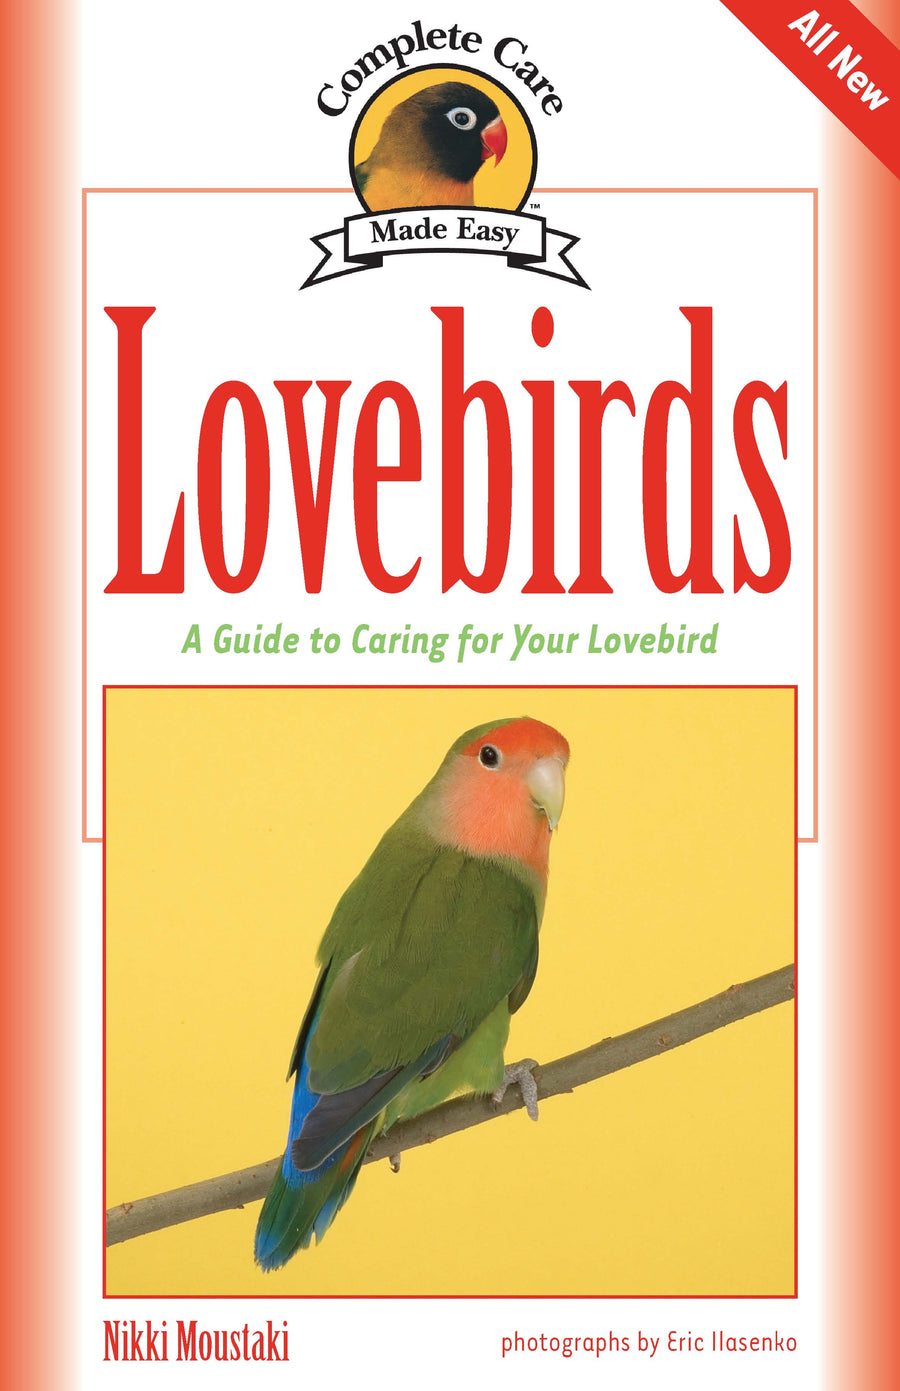 Lovebirds Paperback Publication: 2006/10/01